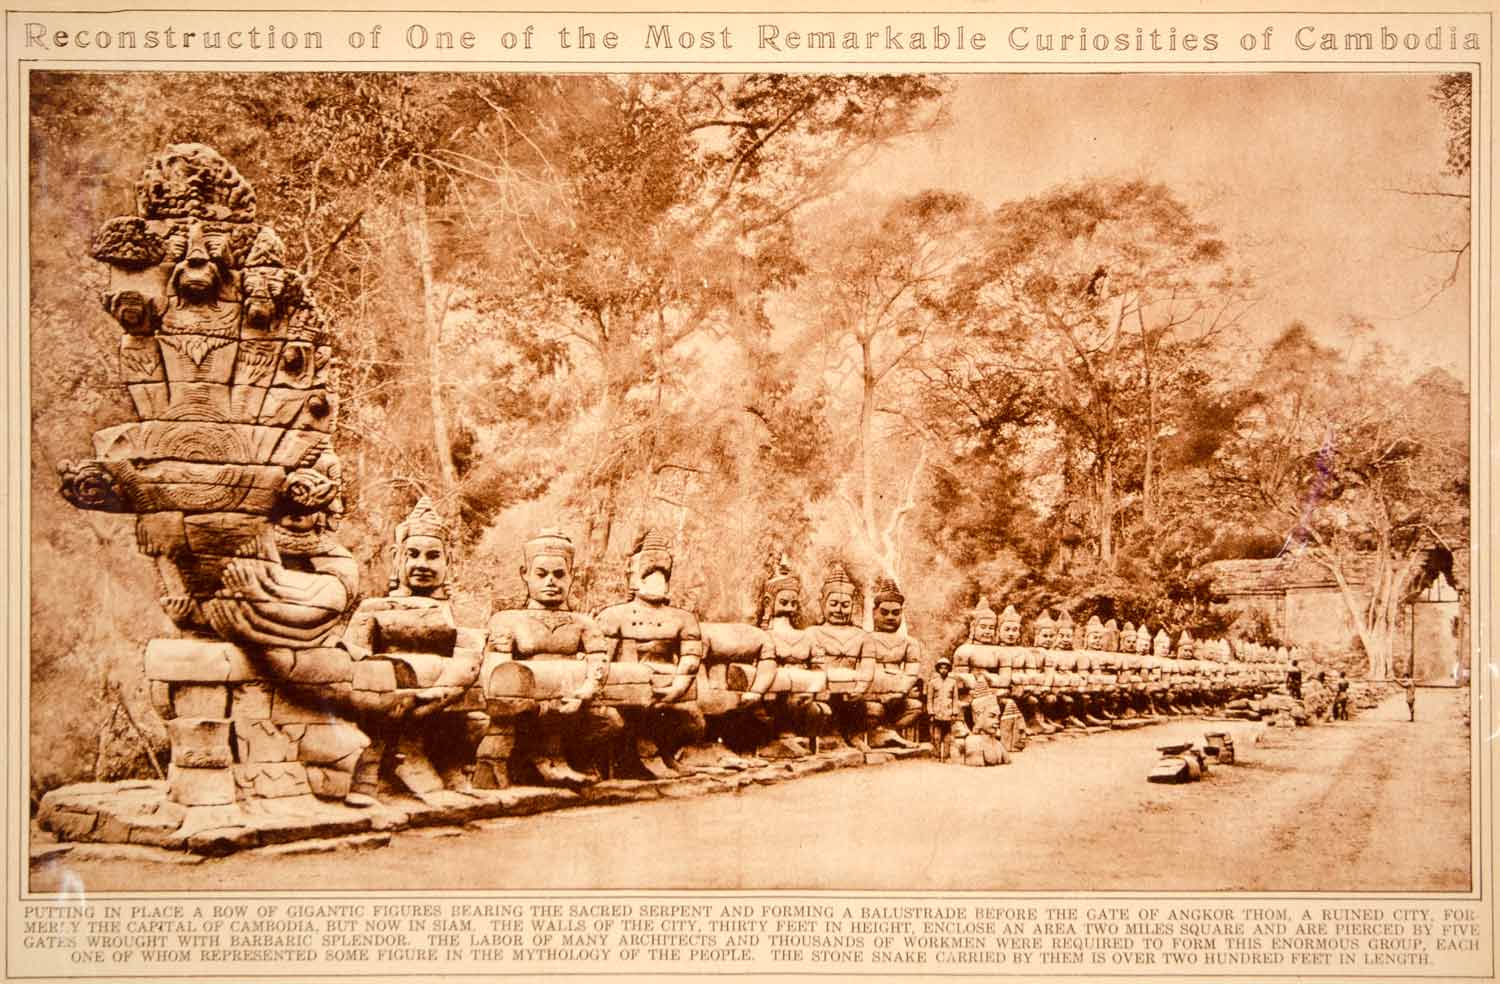 1923 Rotogravure Angkor Thom Gateway Statues Sacred Serpent Cambodia City Ruins